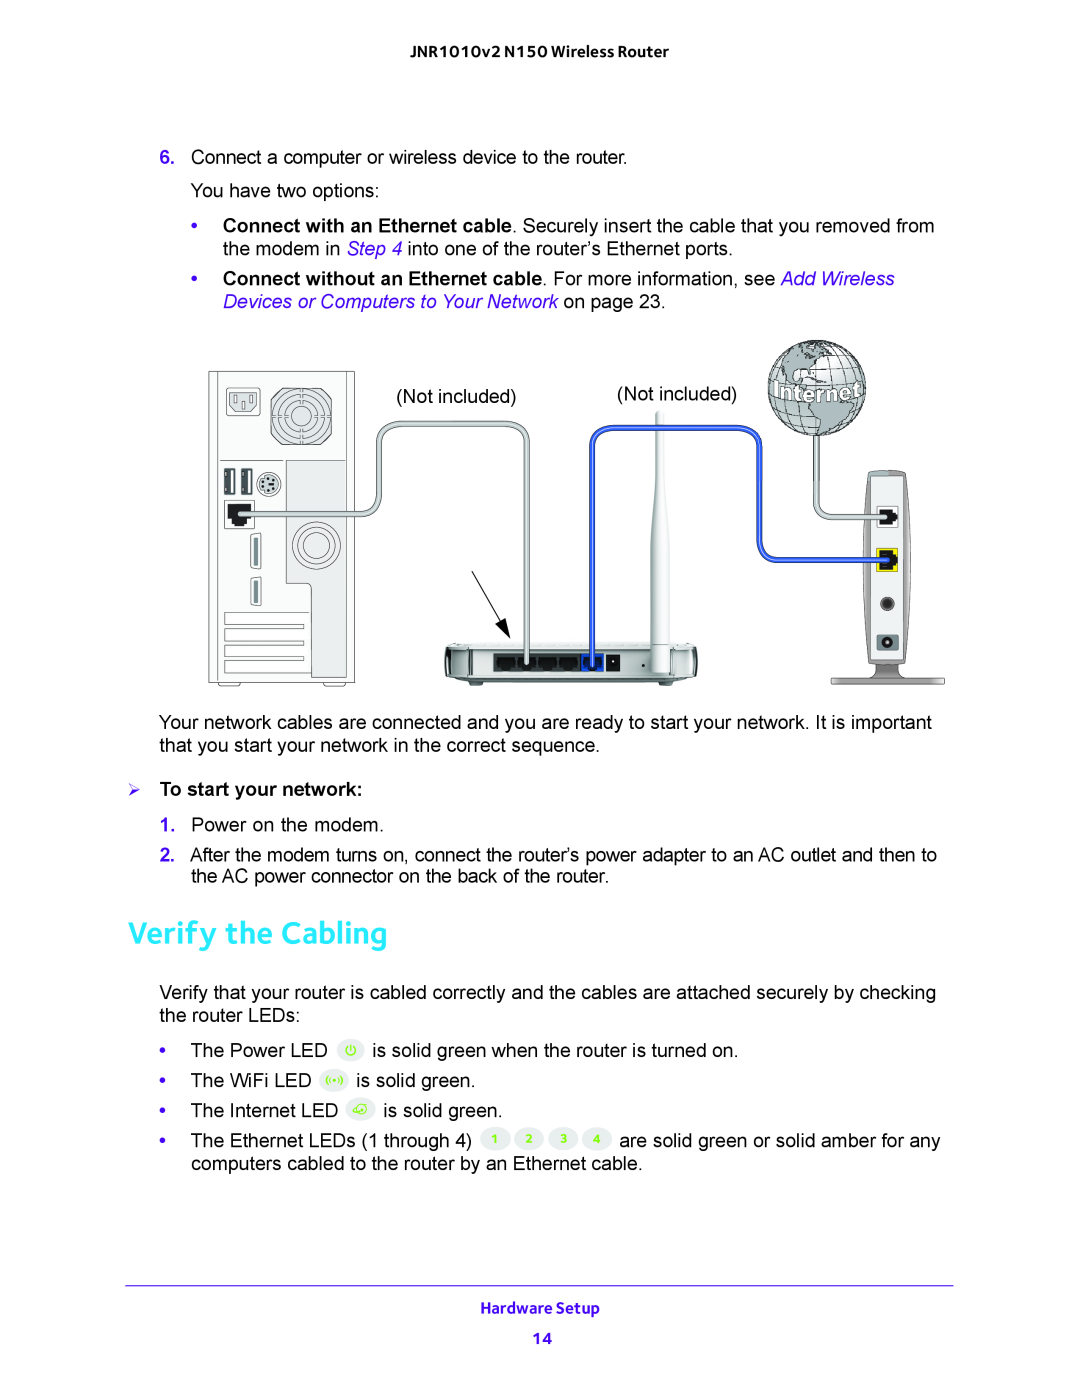 NETGEAR JNR1010V2 user manual Verify the Cabling,  To start your network 